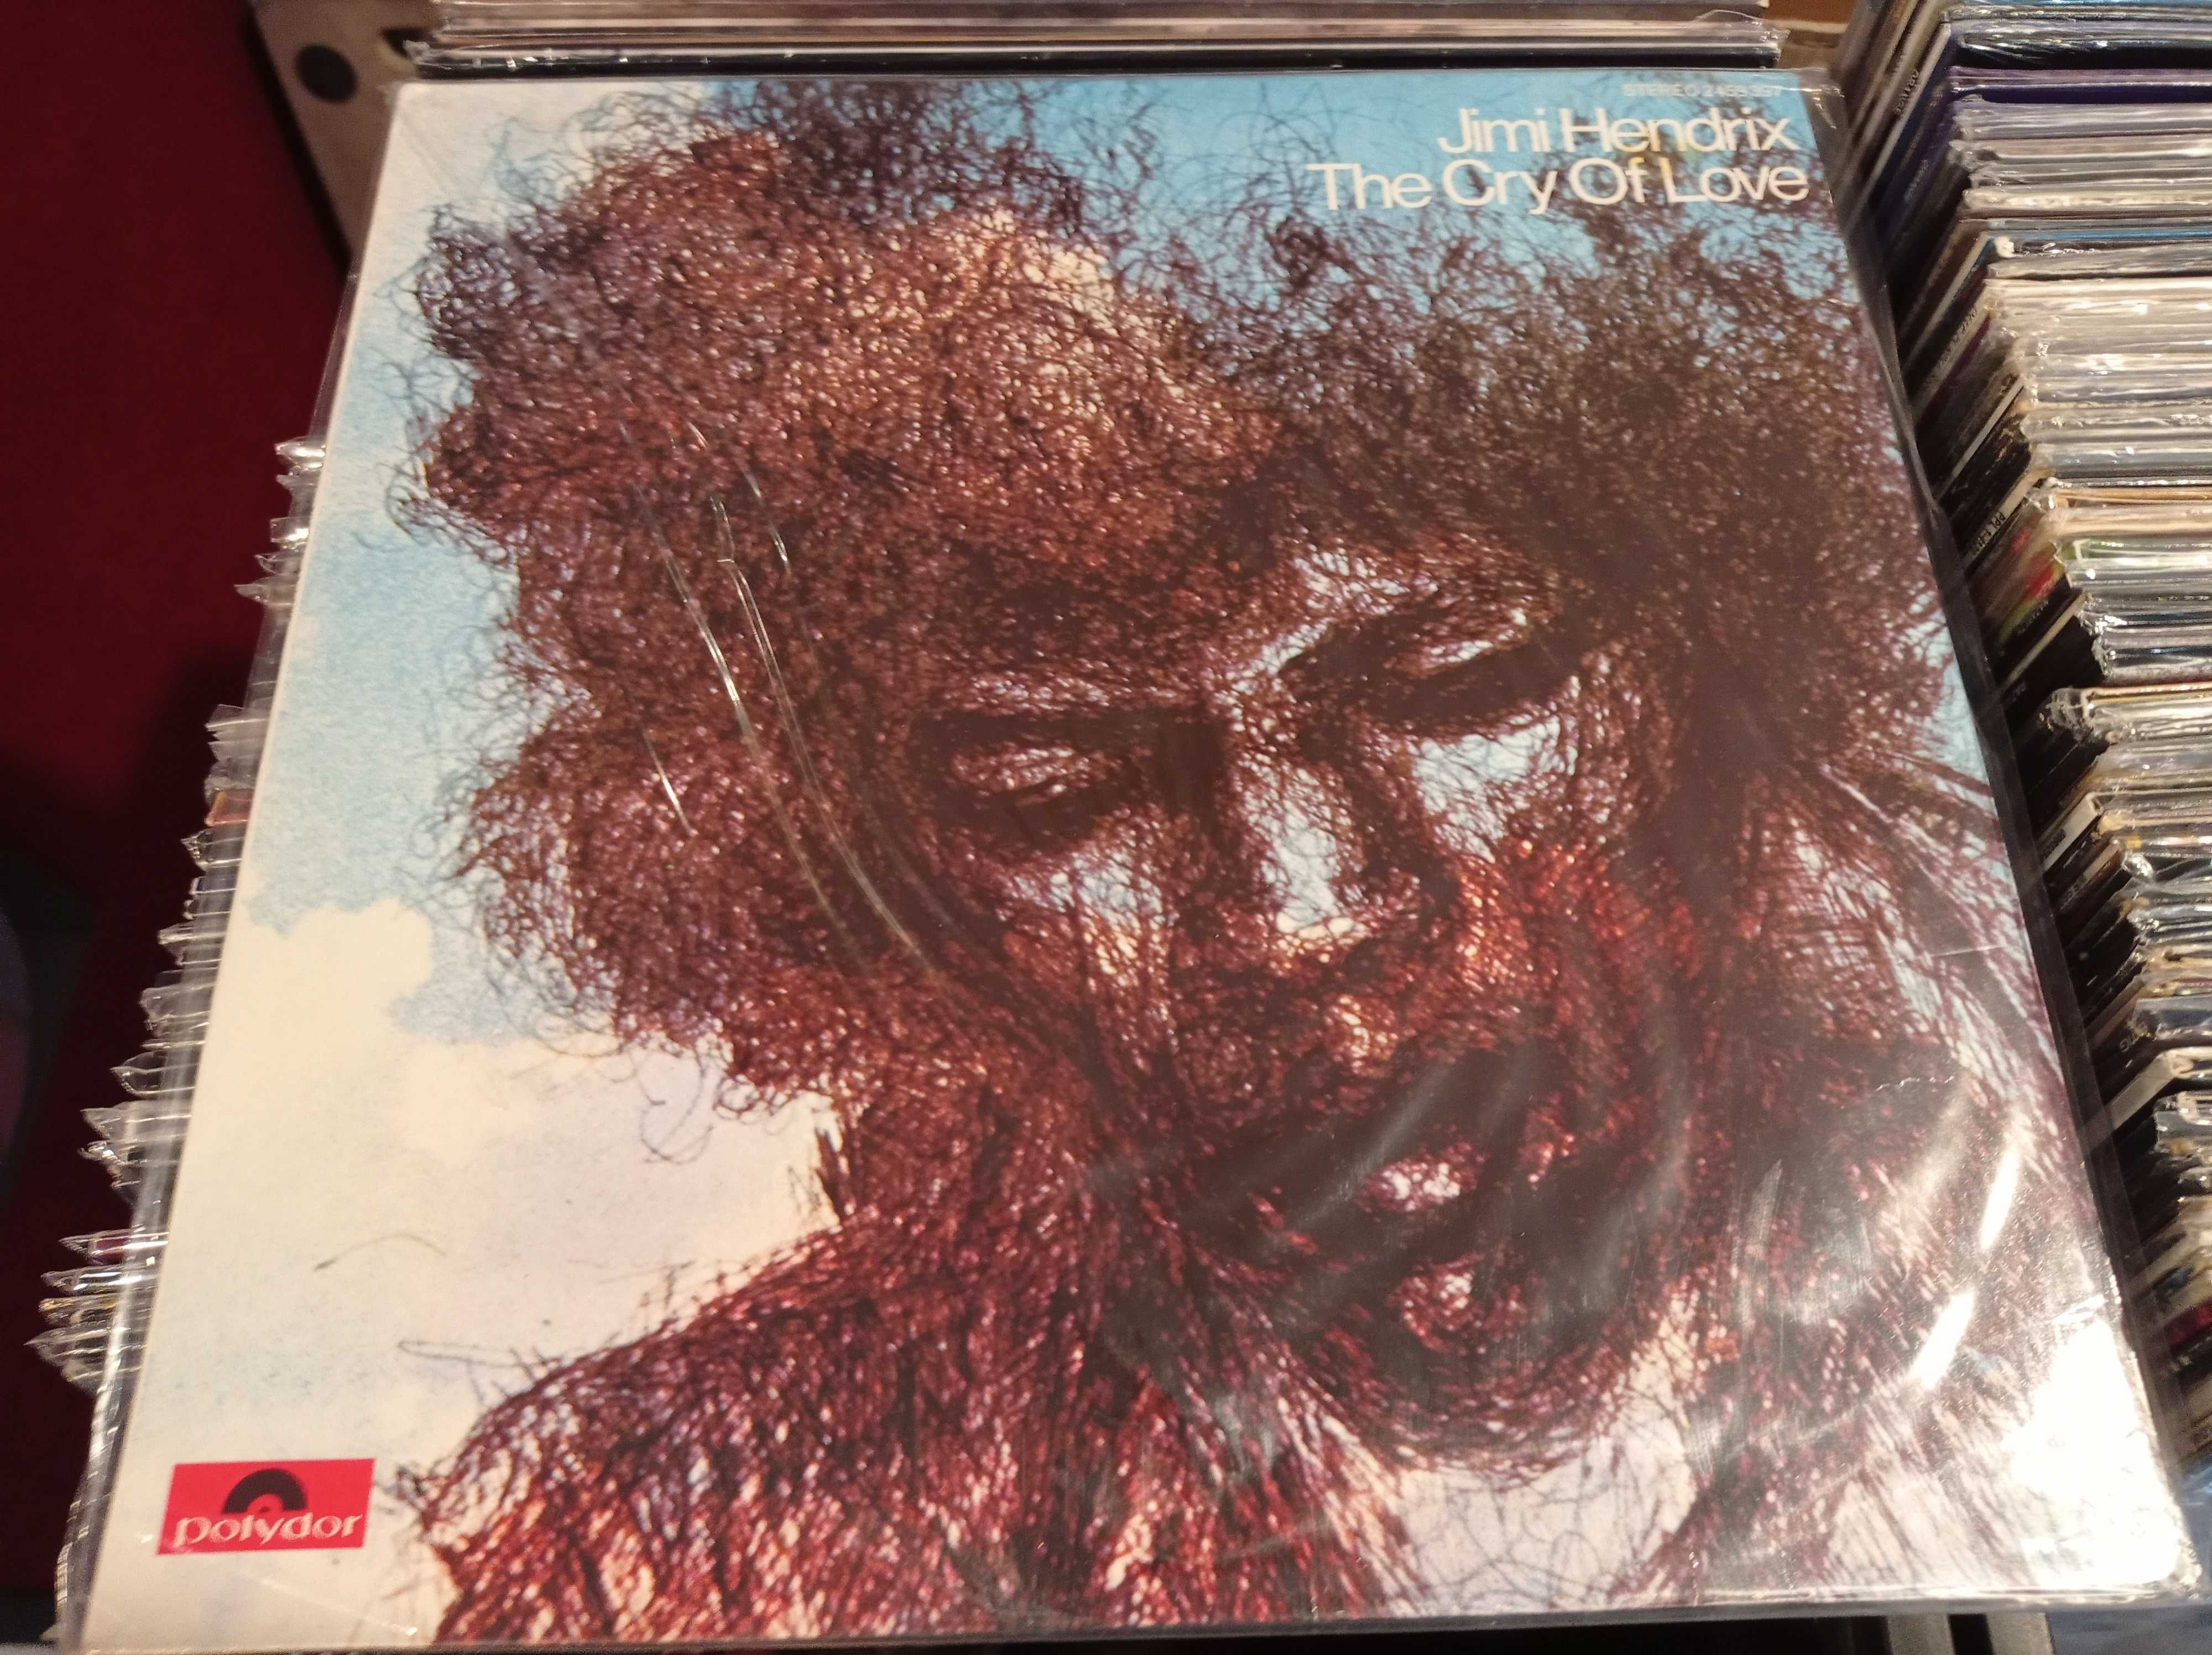 Jimi Hendrix - The cry od love